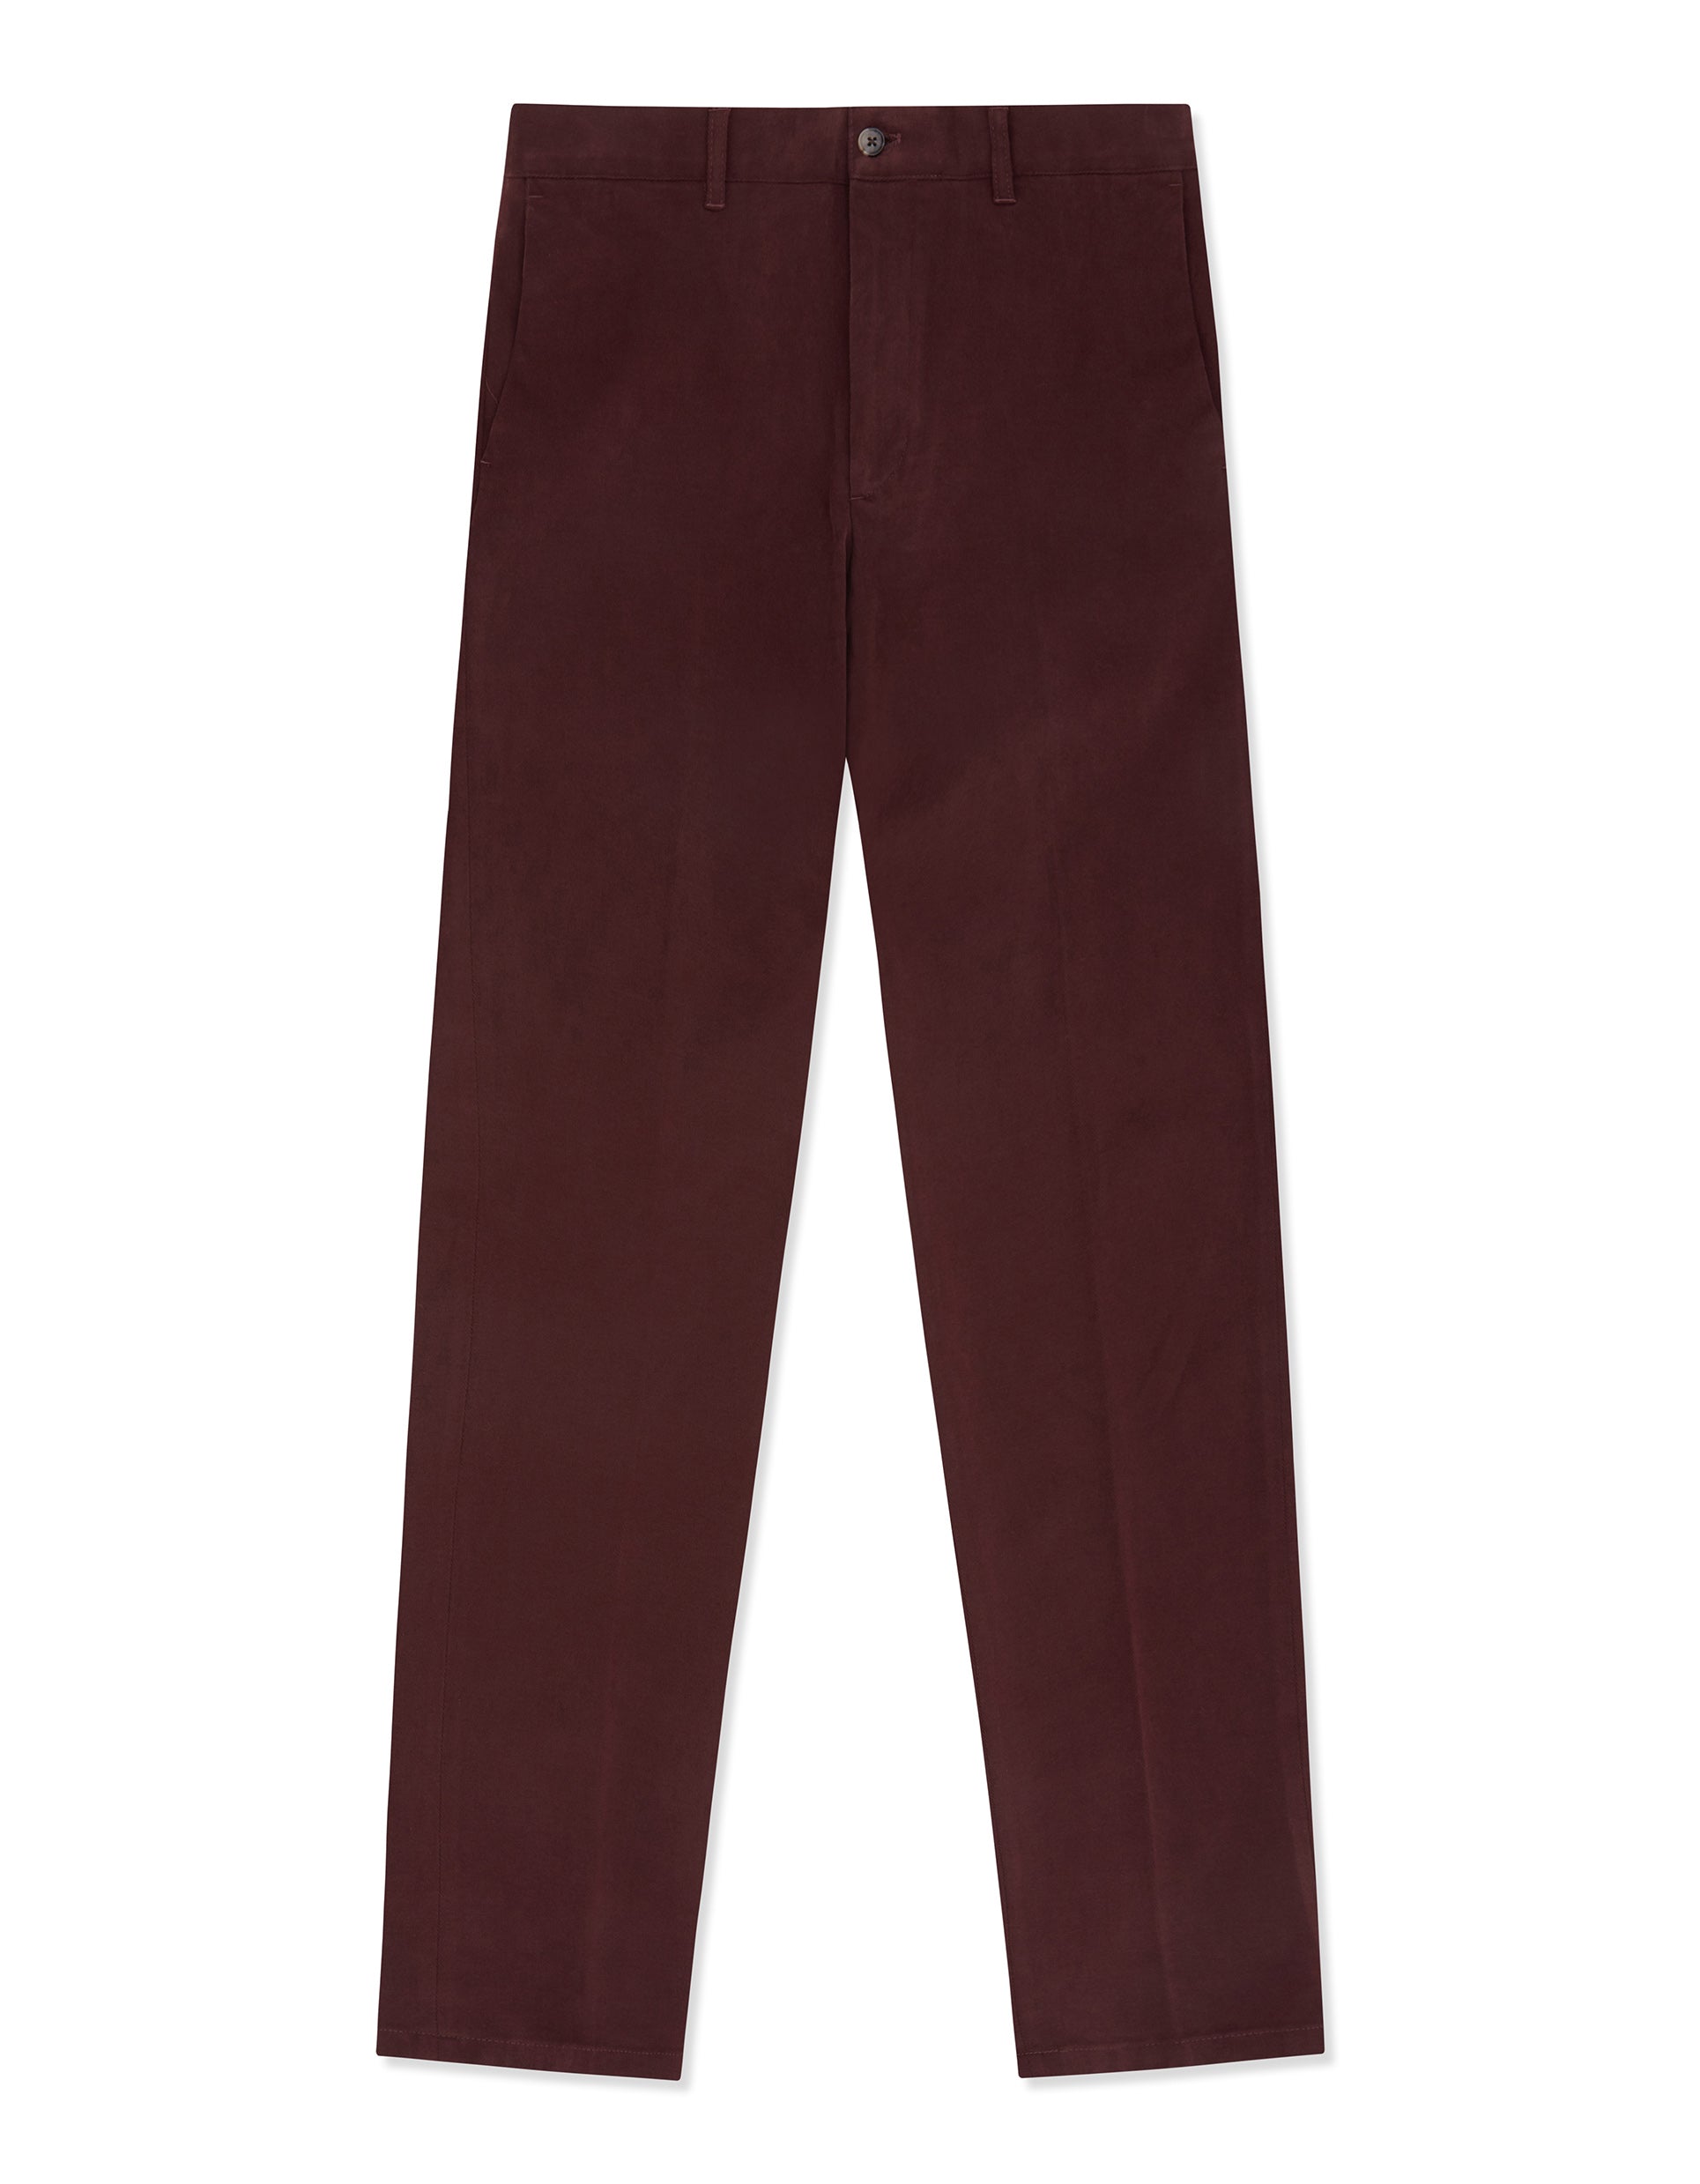 burgundy cotton trouser